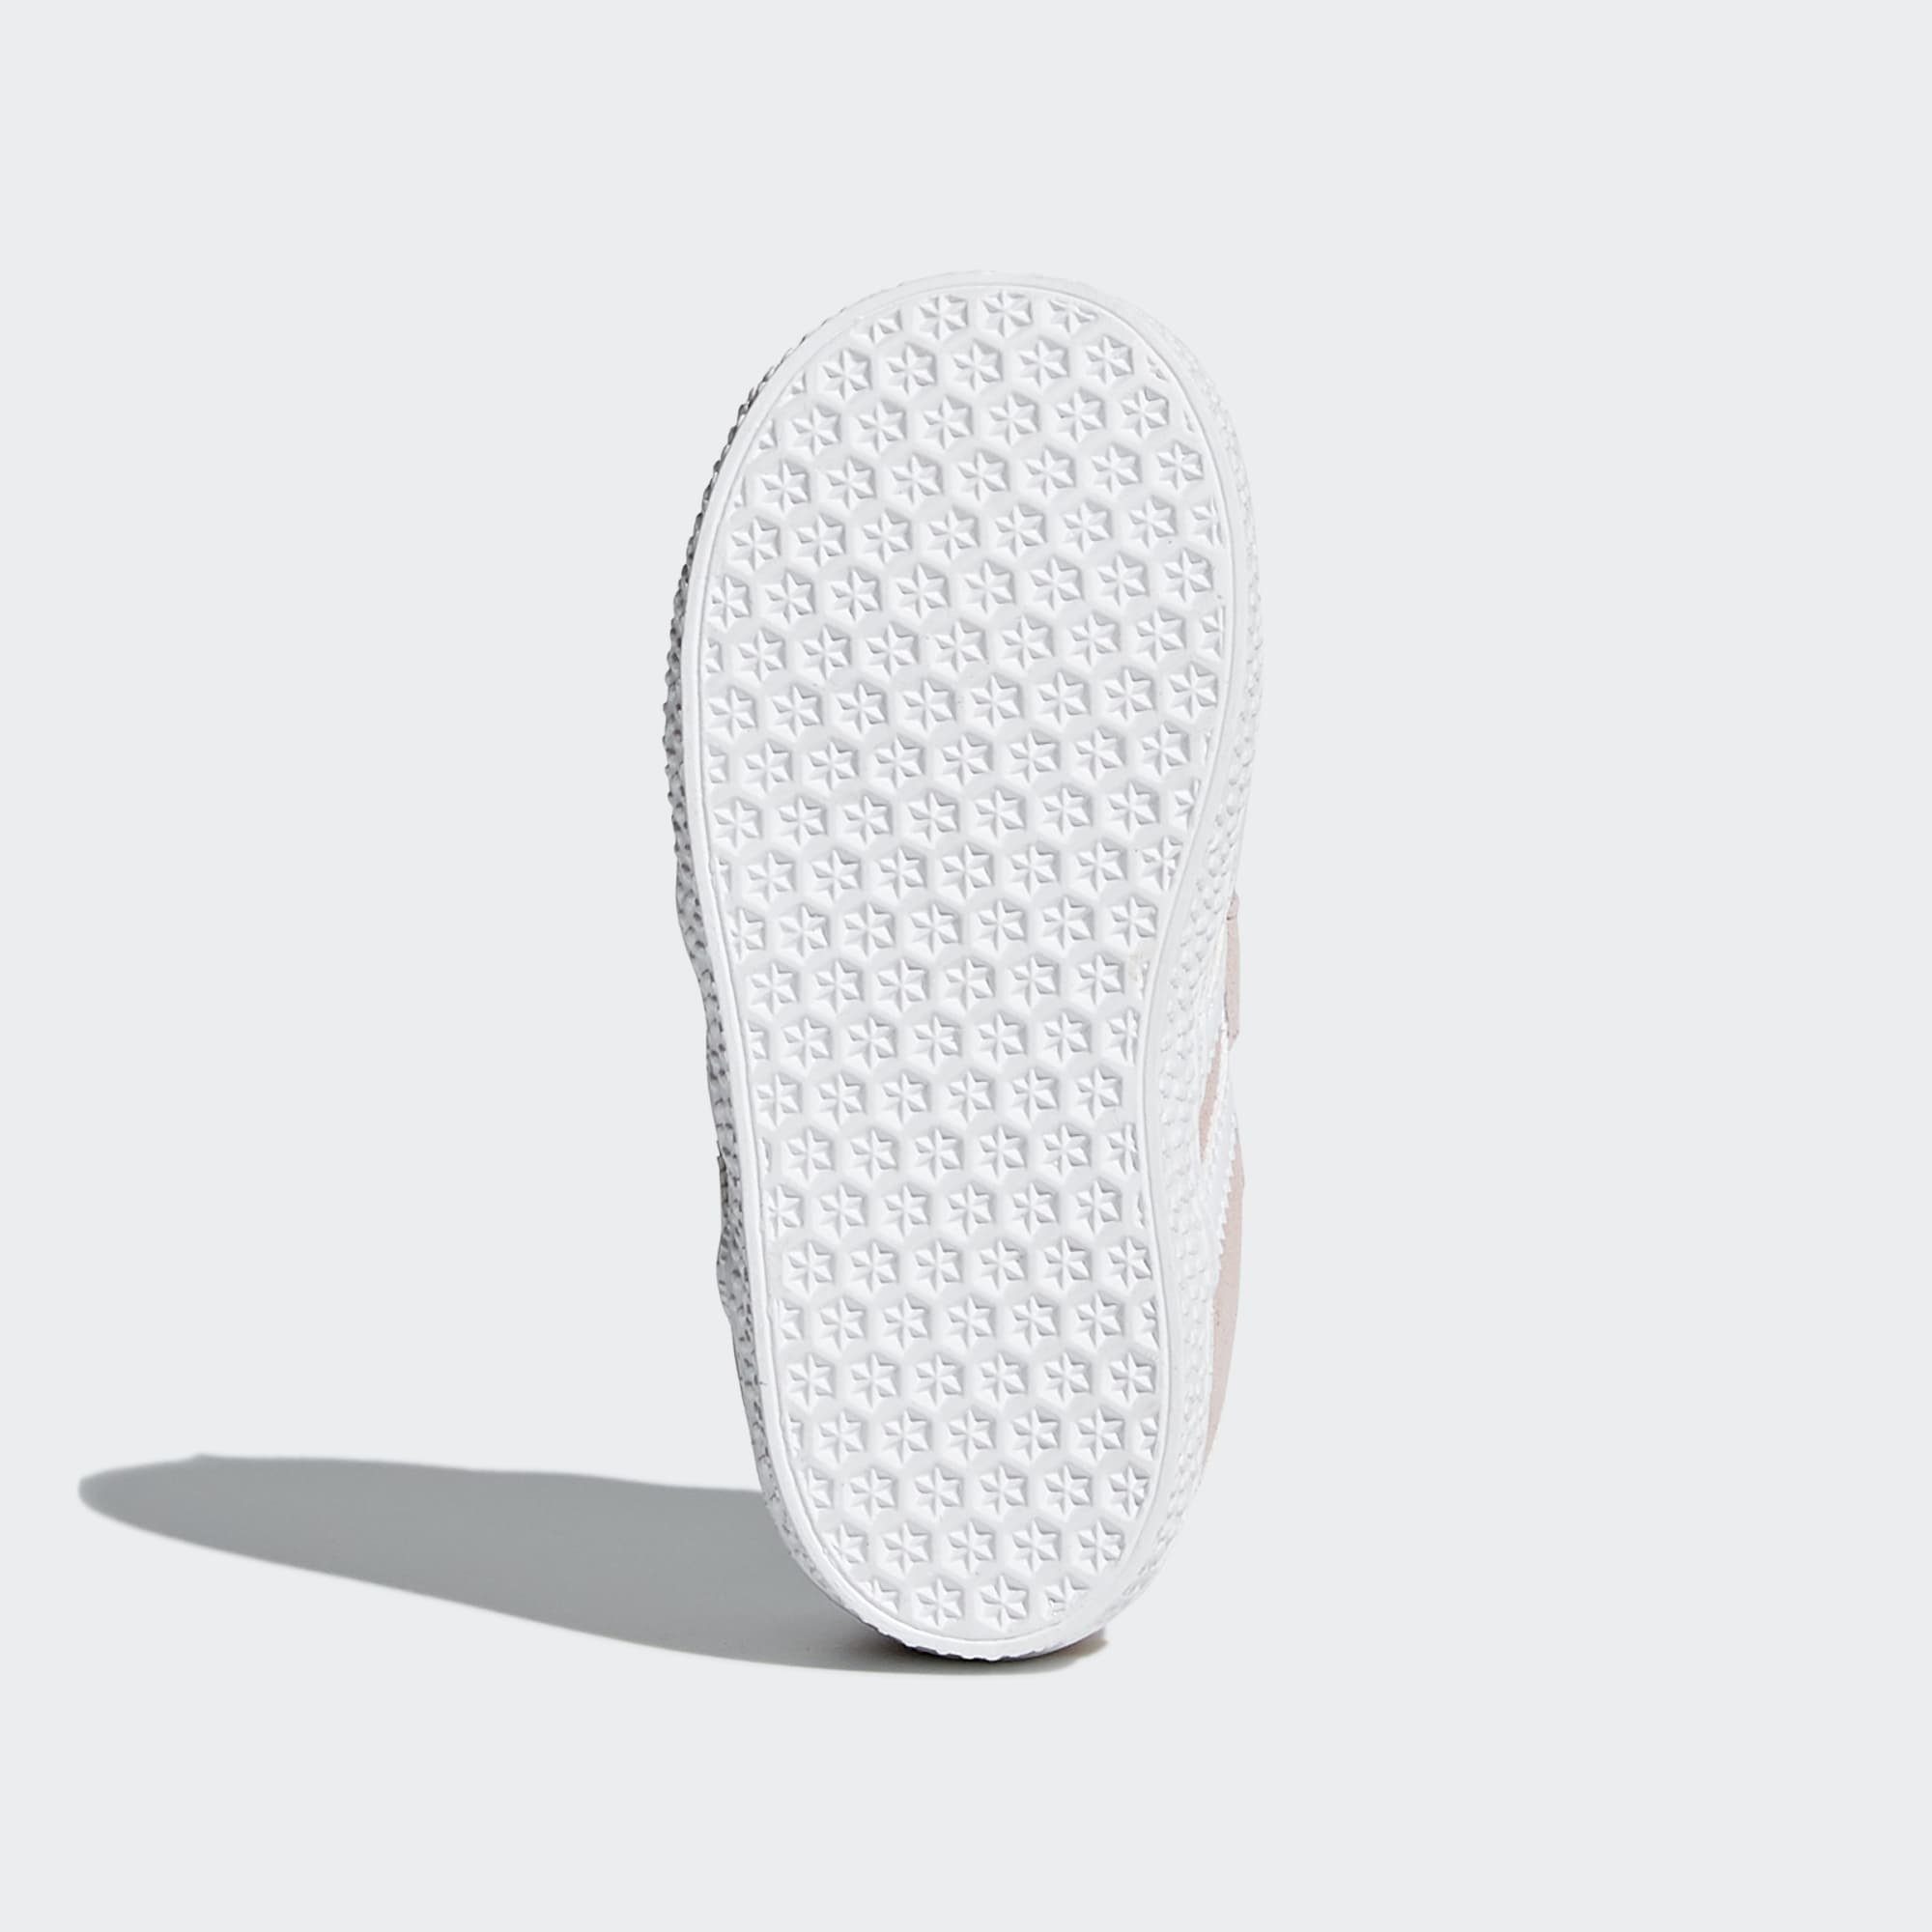 adidas Originals GAZELLE Icey SCHUH Cloud White White / / Pink Sneaker Cloud